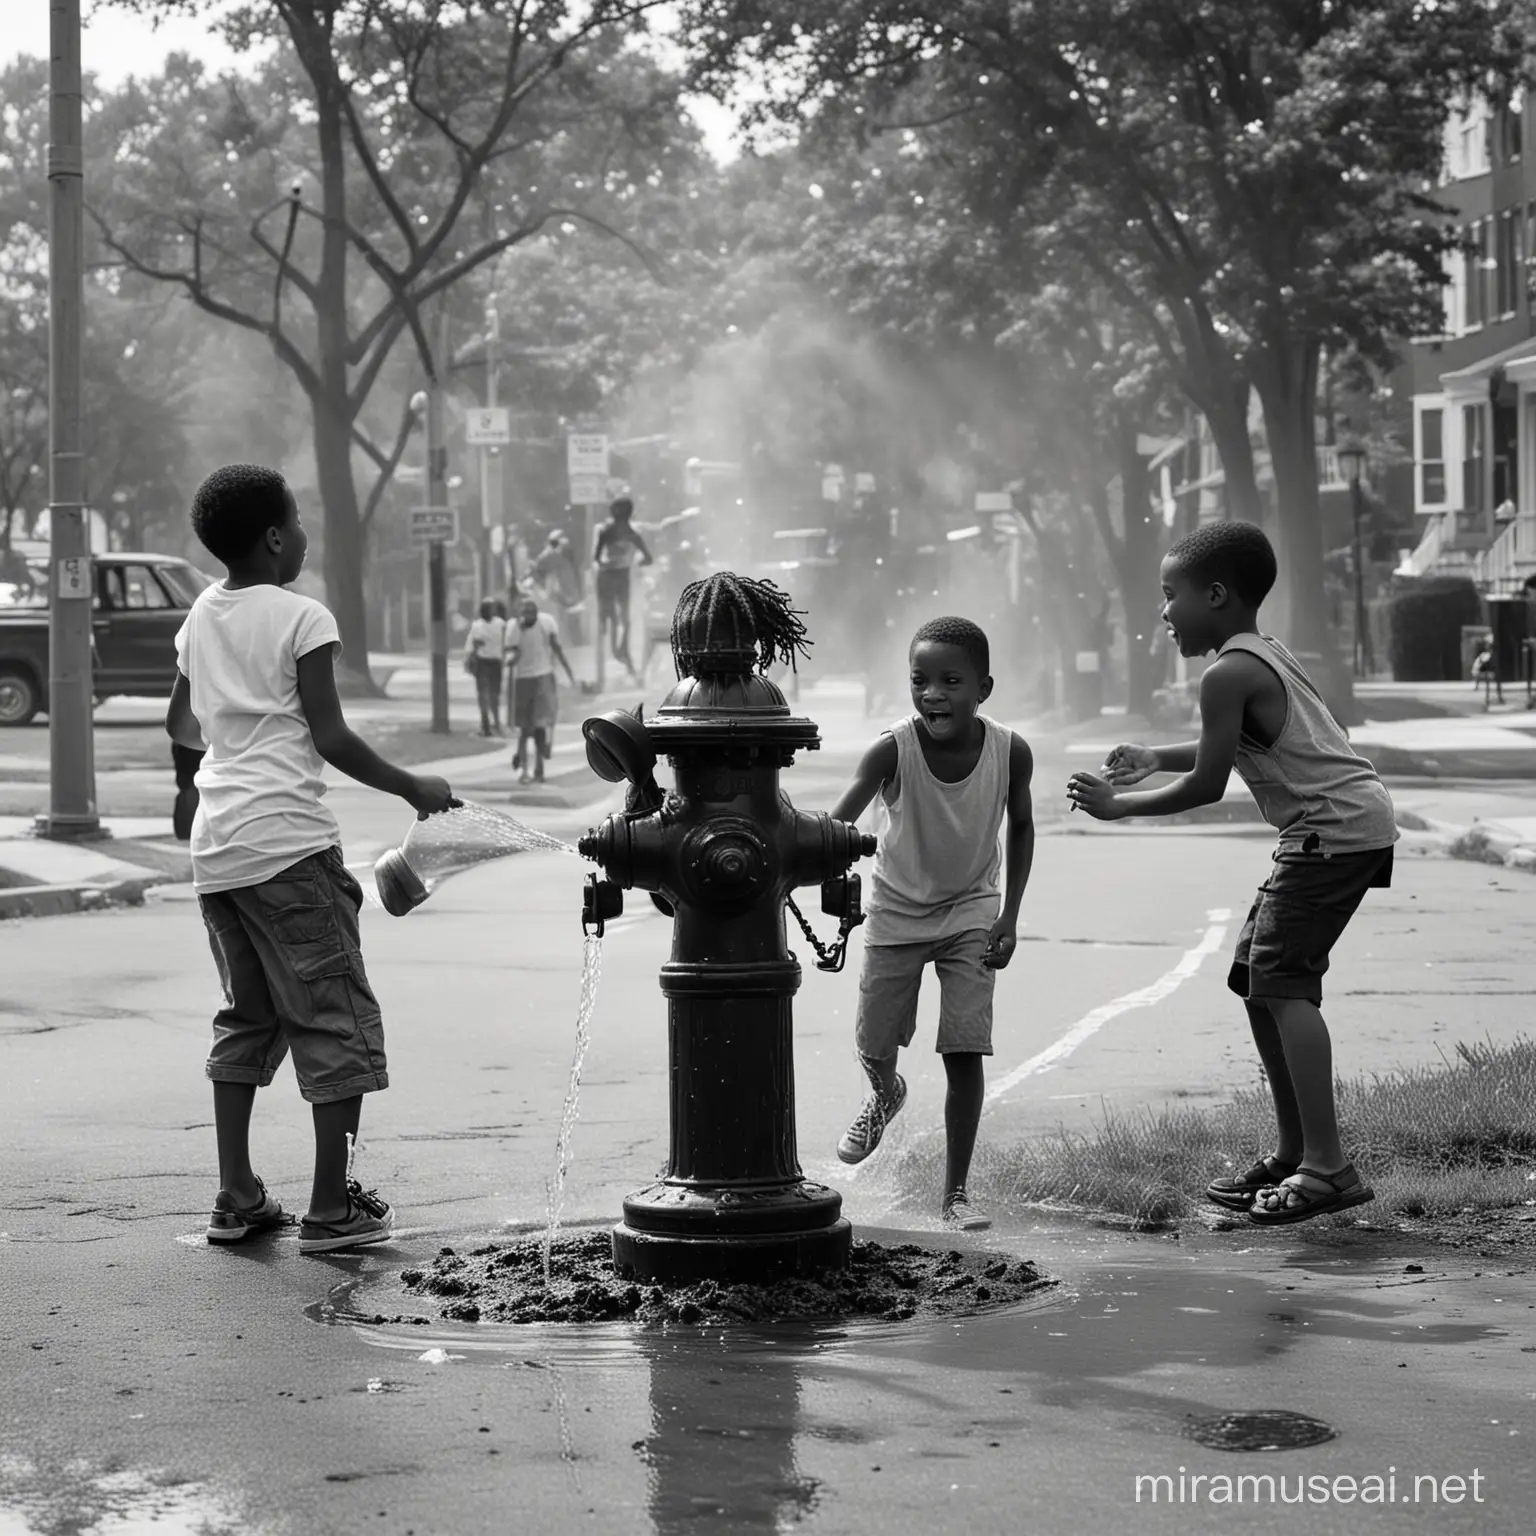 Joyful Black Children Playing in Fire Hydrant Spray